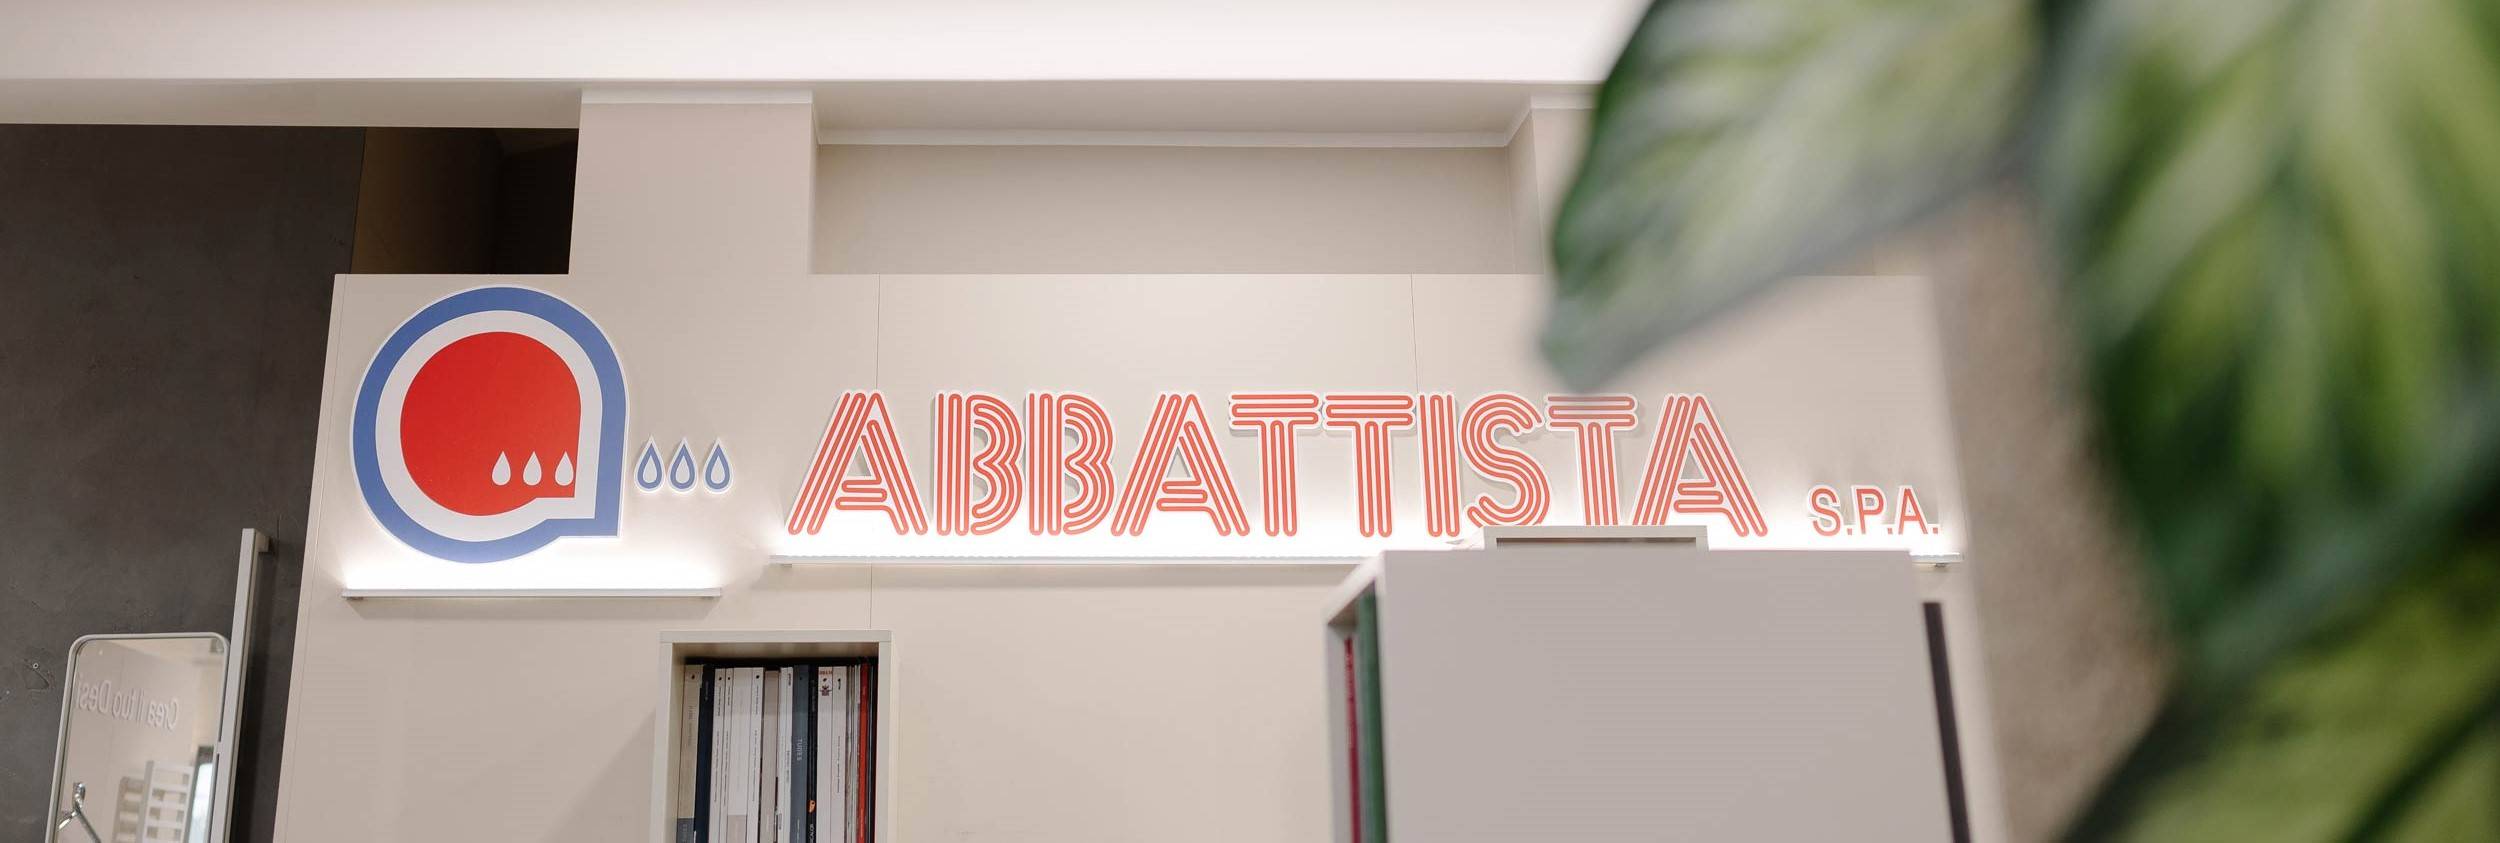 abbattista-showroom-logo-2